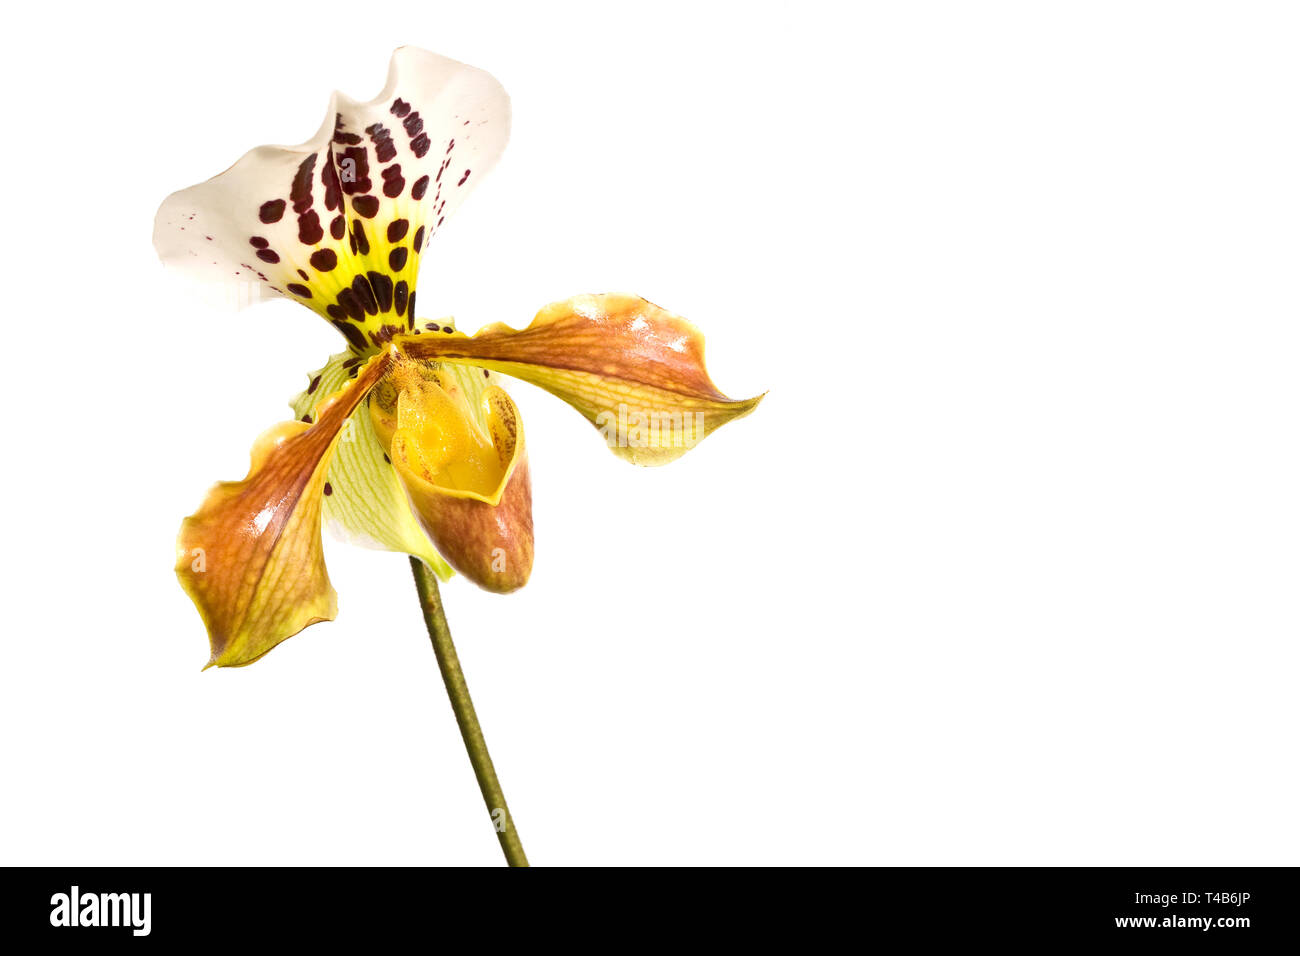 Giallo Lady pantofola (paphiopedilum) orchid, close-up isolati su sfondo bianco Foto Stock